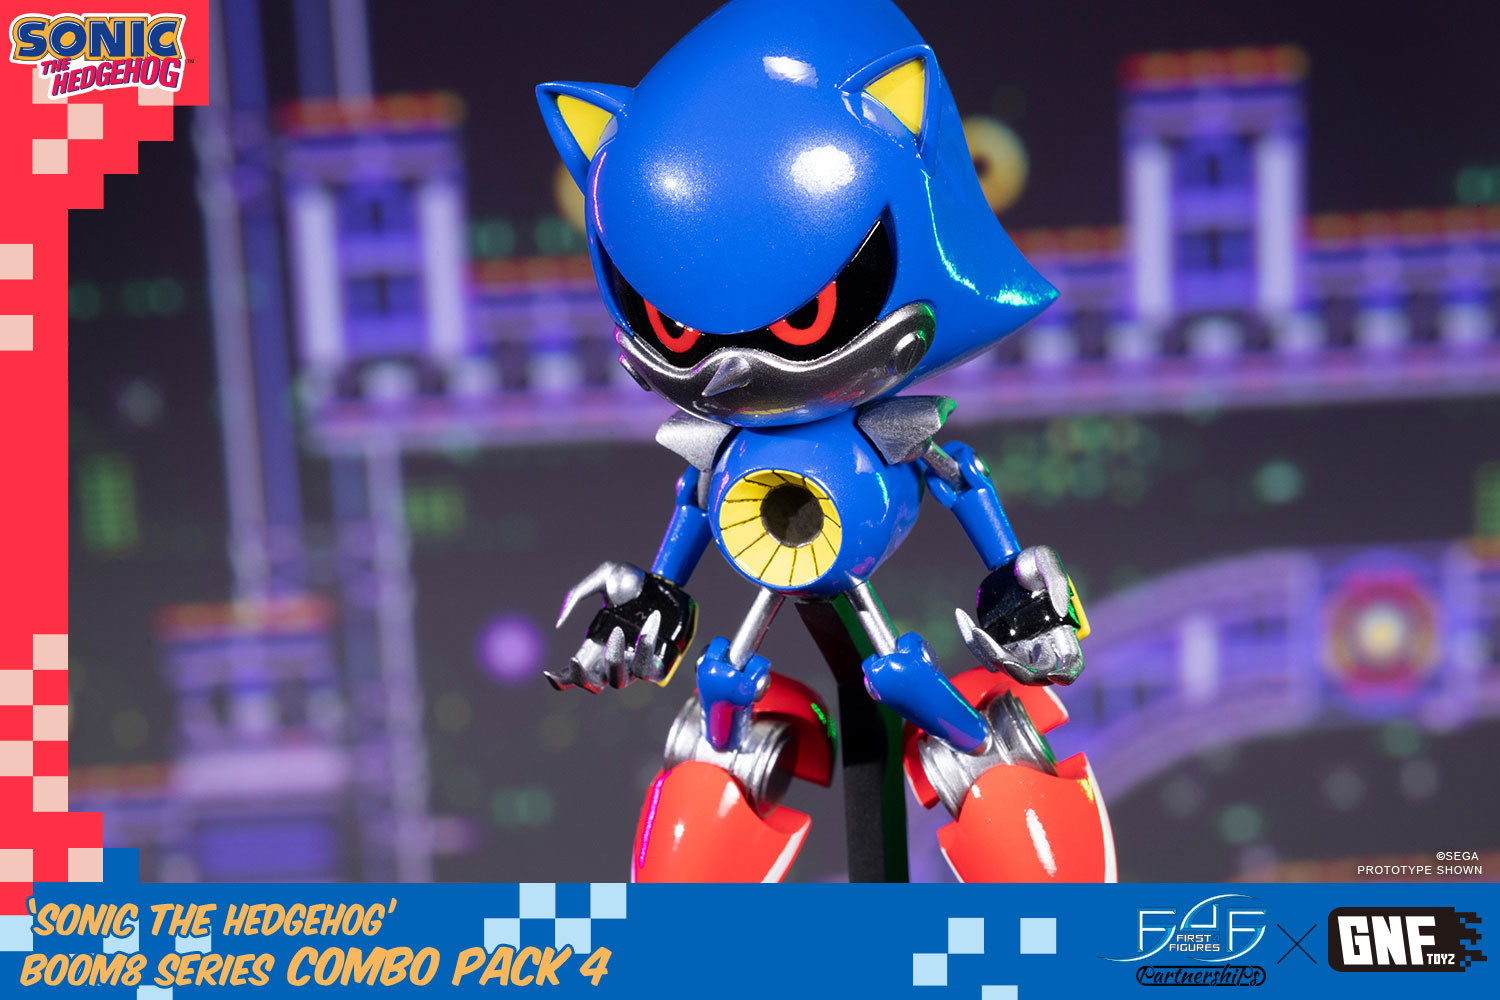 Sonic the Hedgehog Boom8 Series Volume 7